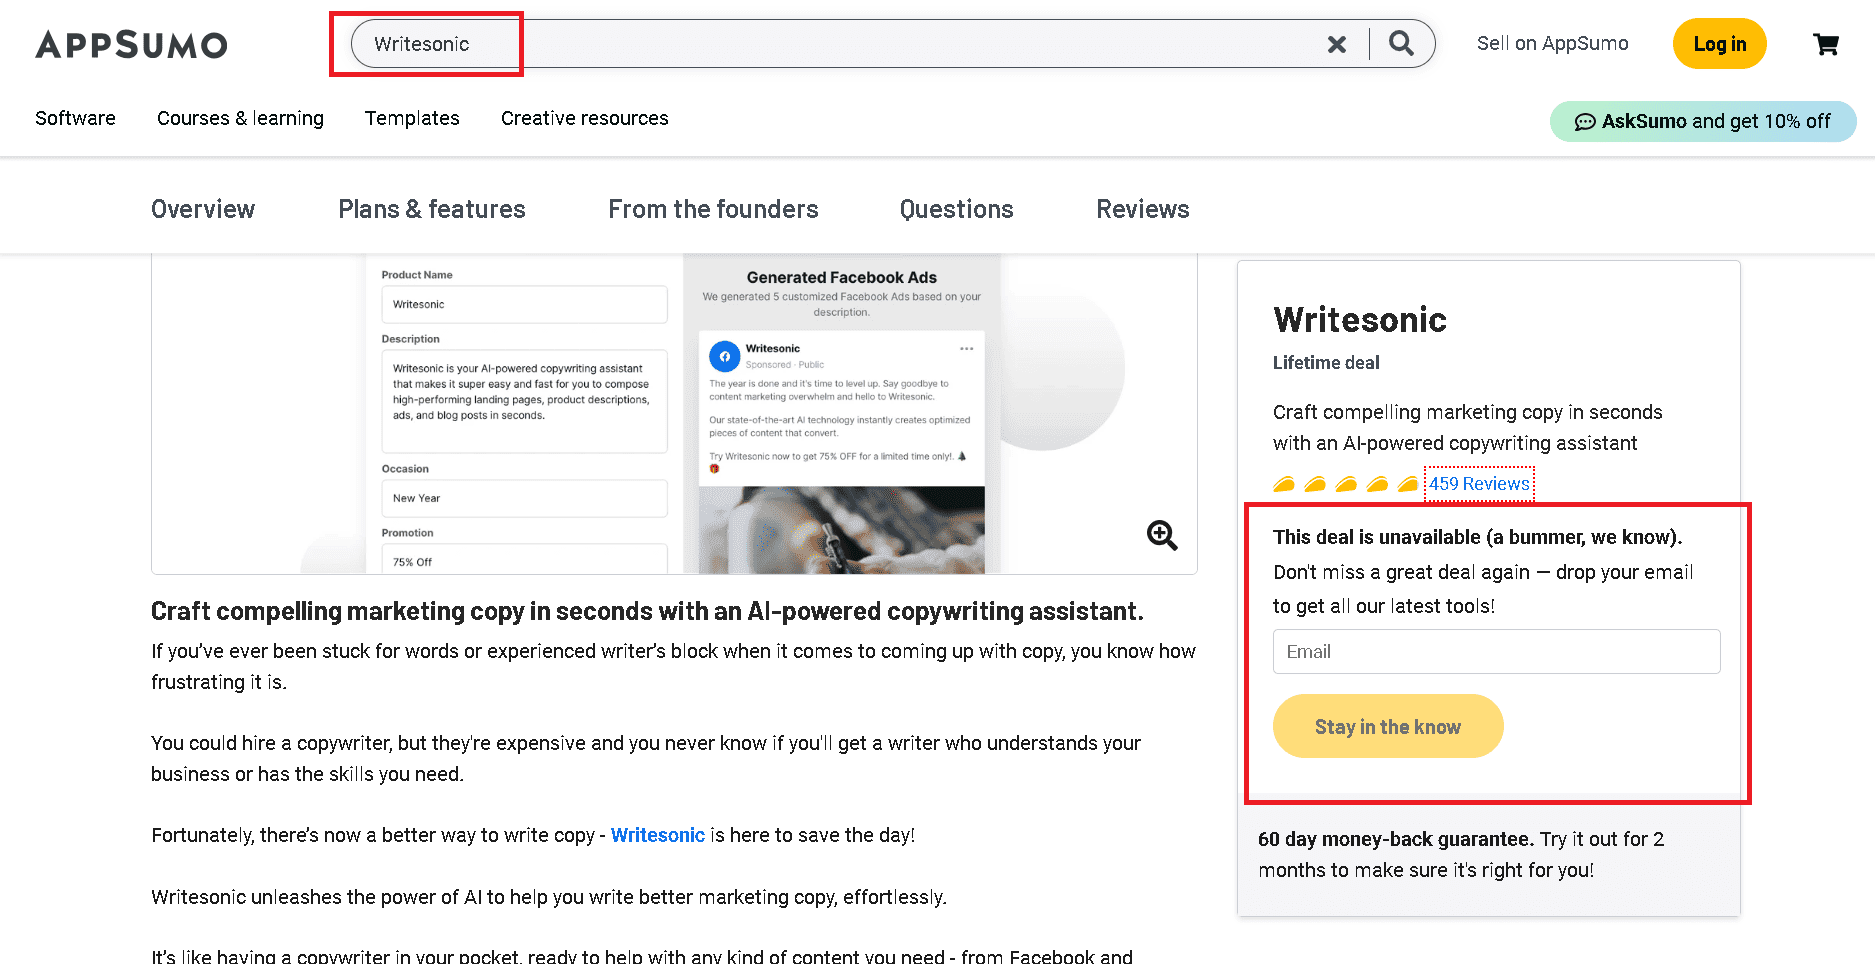 Writesonic AppSumo lifetime deal doesn't exist.